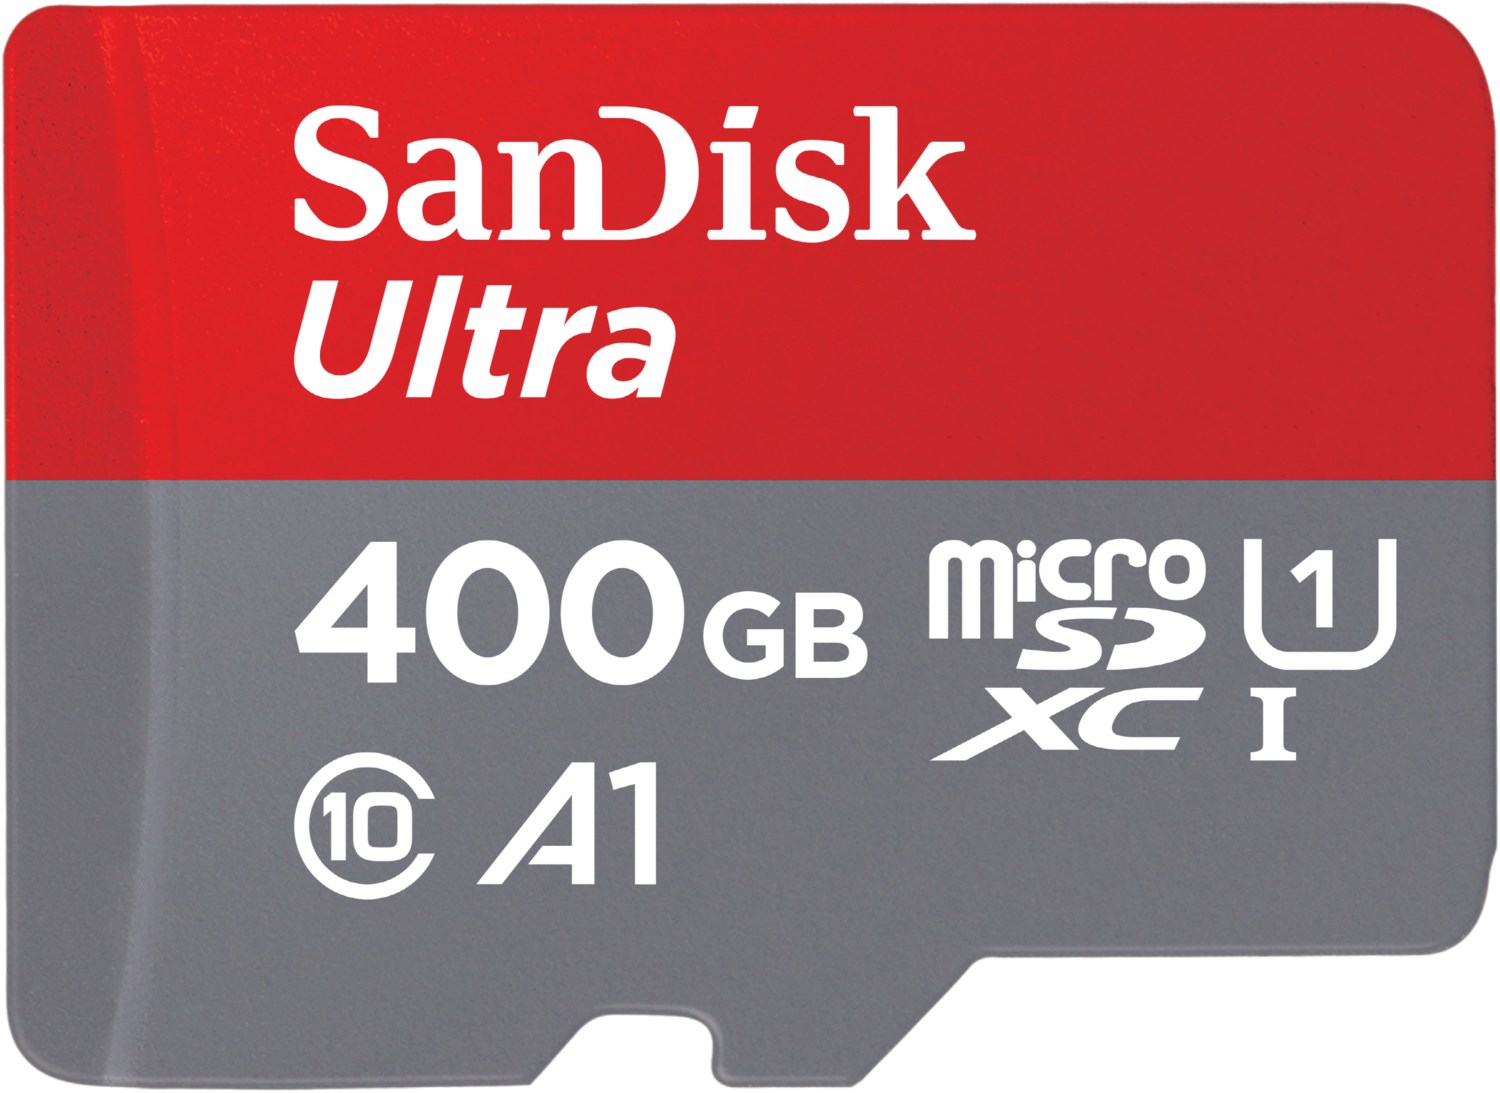 microSDXC Ultra A1 (400GB) Speicherkarte von Sandisk